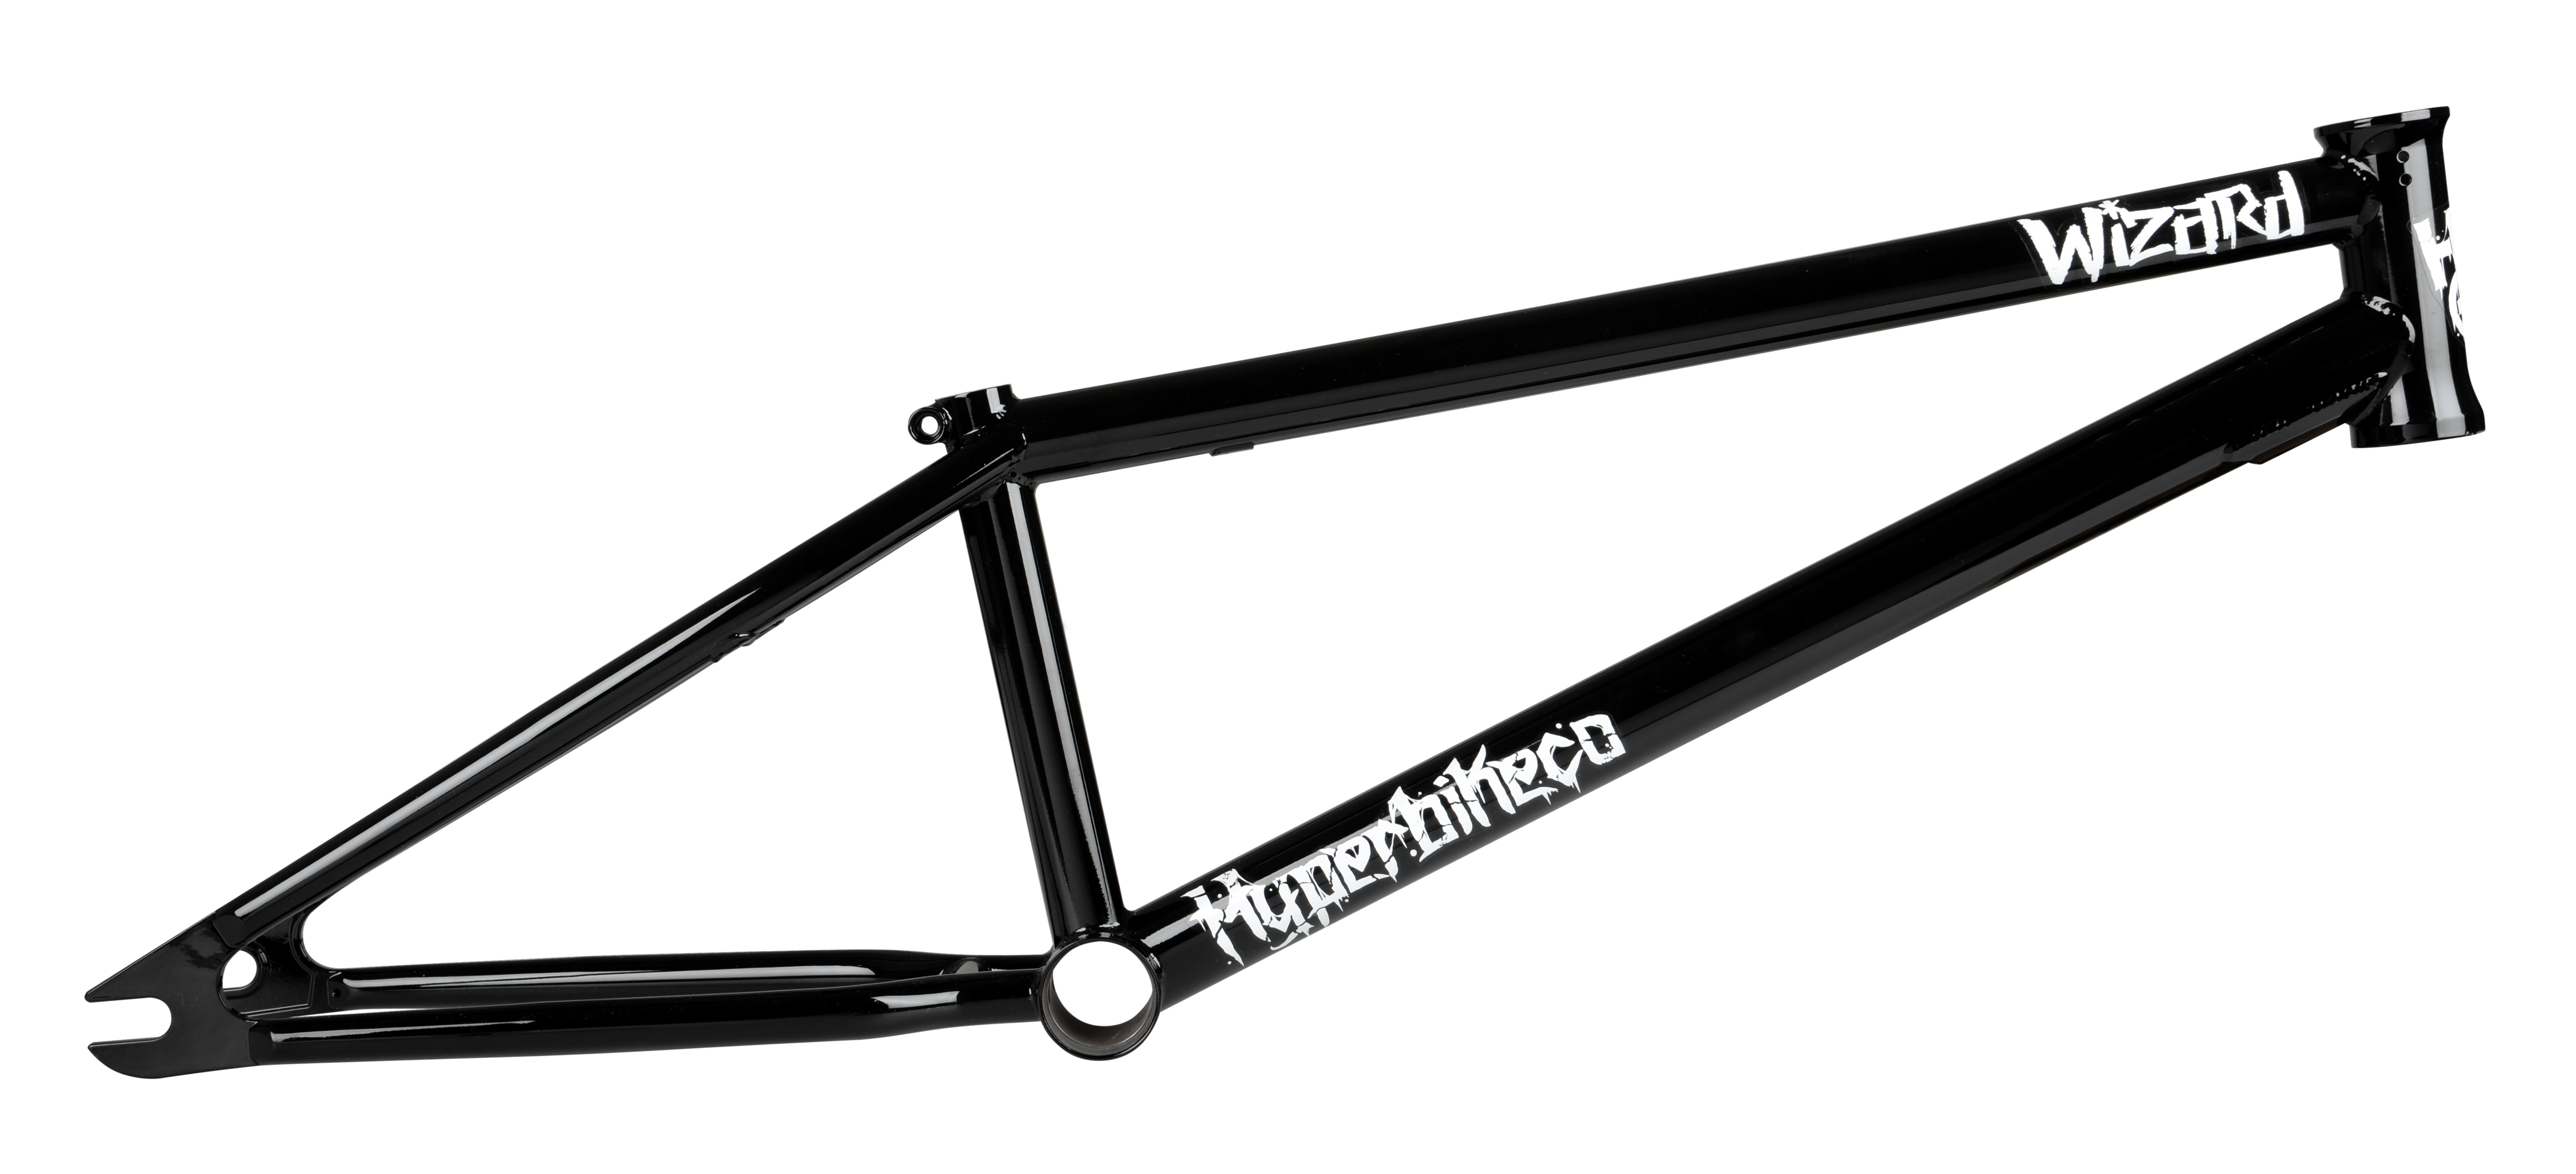 bmx bikes frames